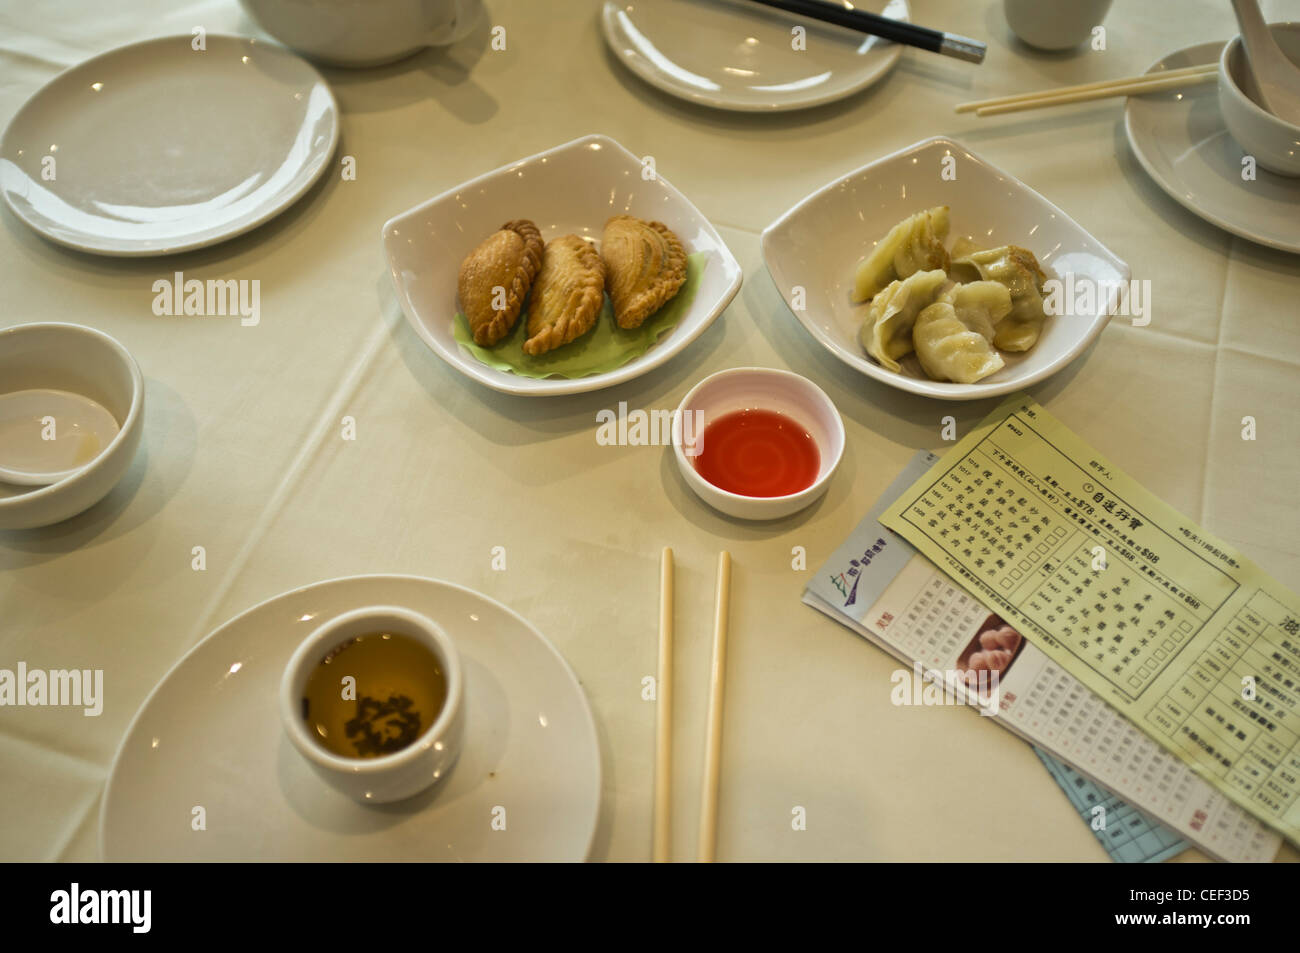 dh COMIDA HONG KONG chino dim sum platos taza de té menú cartas mesa poner china restaurante desayuno Foto de stock